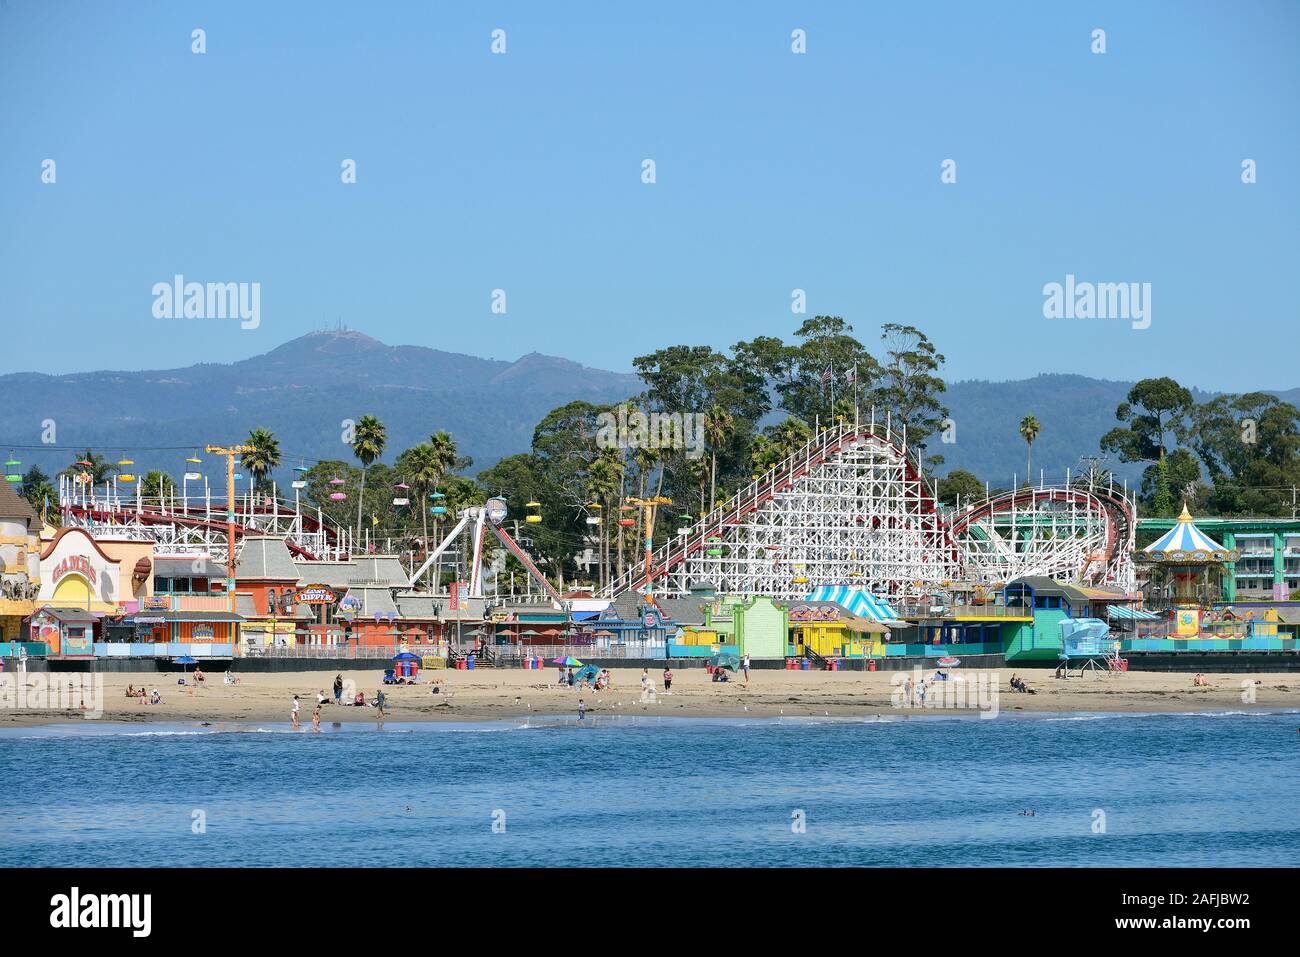 Santa Cruz Beach Boardwalk Amusement Park, amusement park with numerous games and rides on the beach of Santa Cruz, California, USA Stock Photo